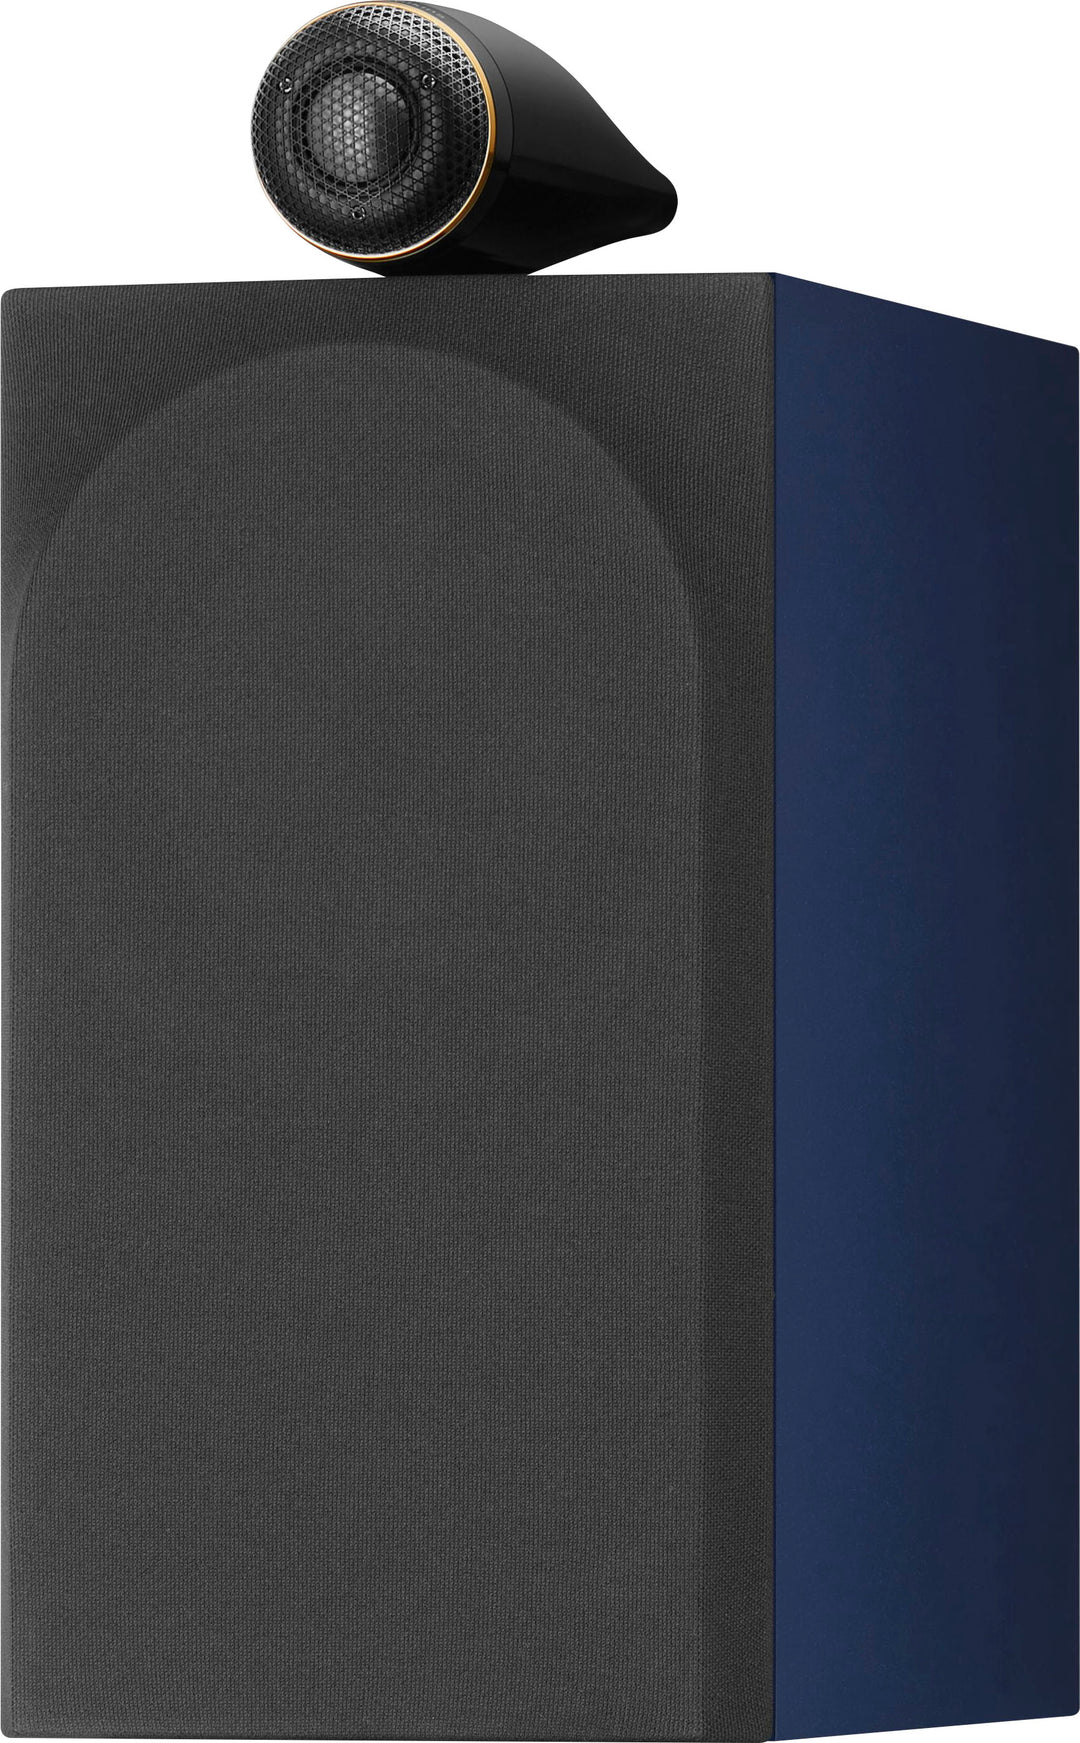 Bowers & Wilkins - 700 Series 3 Signature Bookshelf Speaker with 1" Tweeter on Top and 6.5" Midbass (Pair) - Metallic Midnight Blue_9